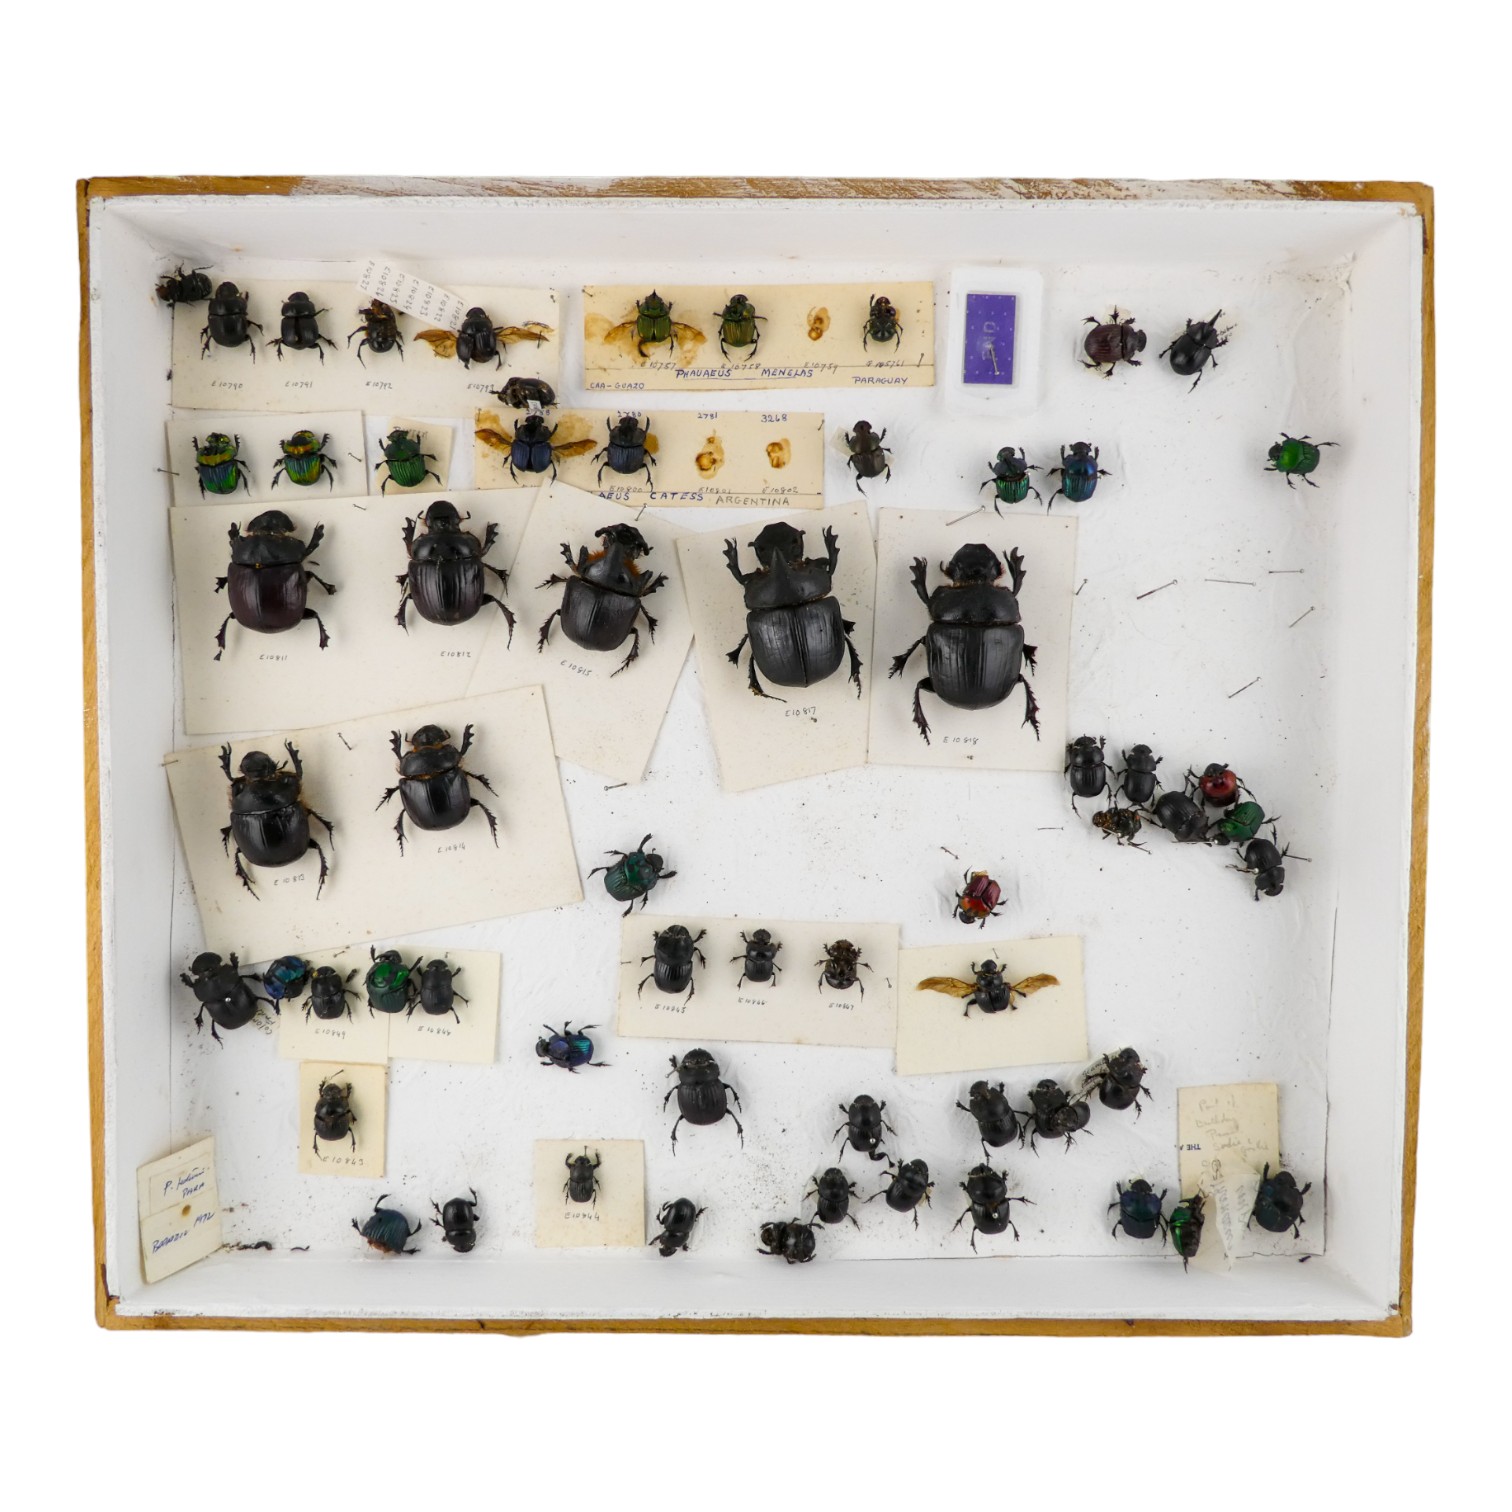 A case of beetles randomly set